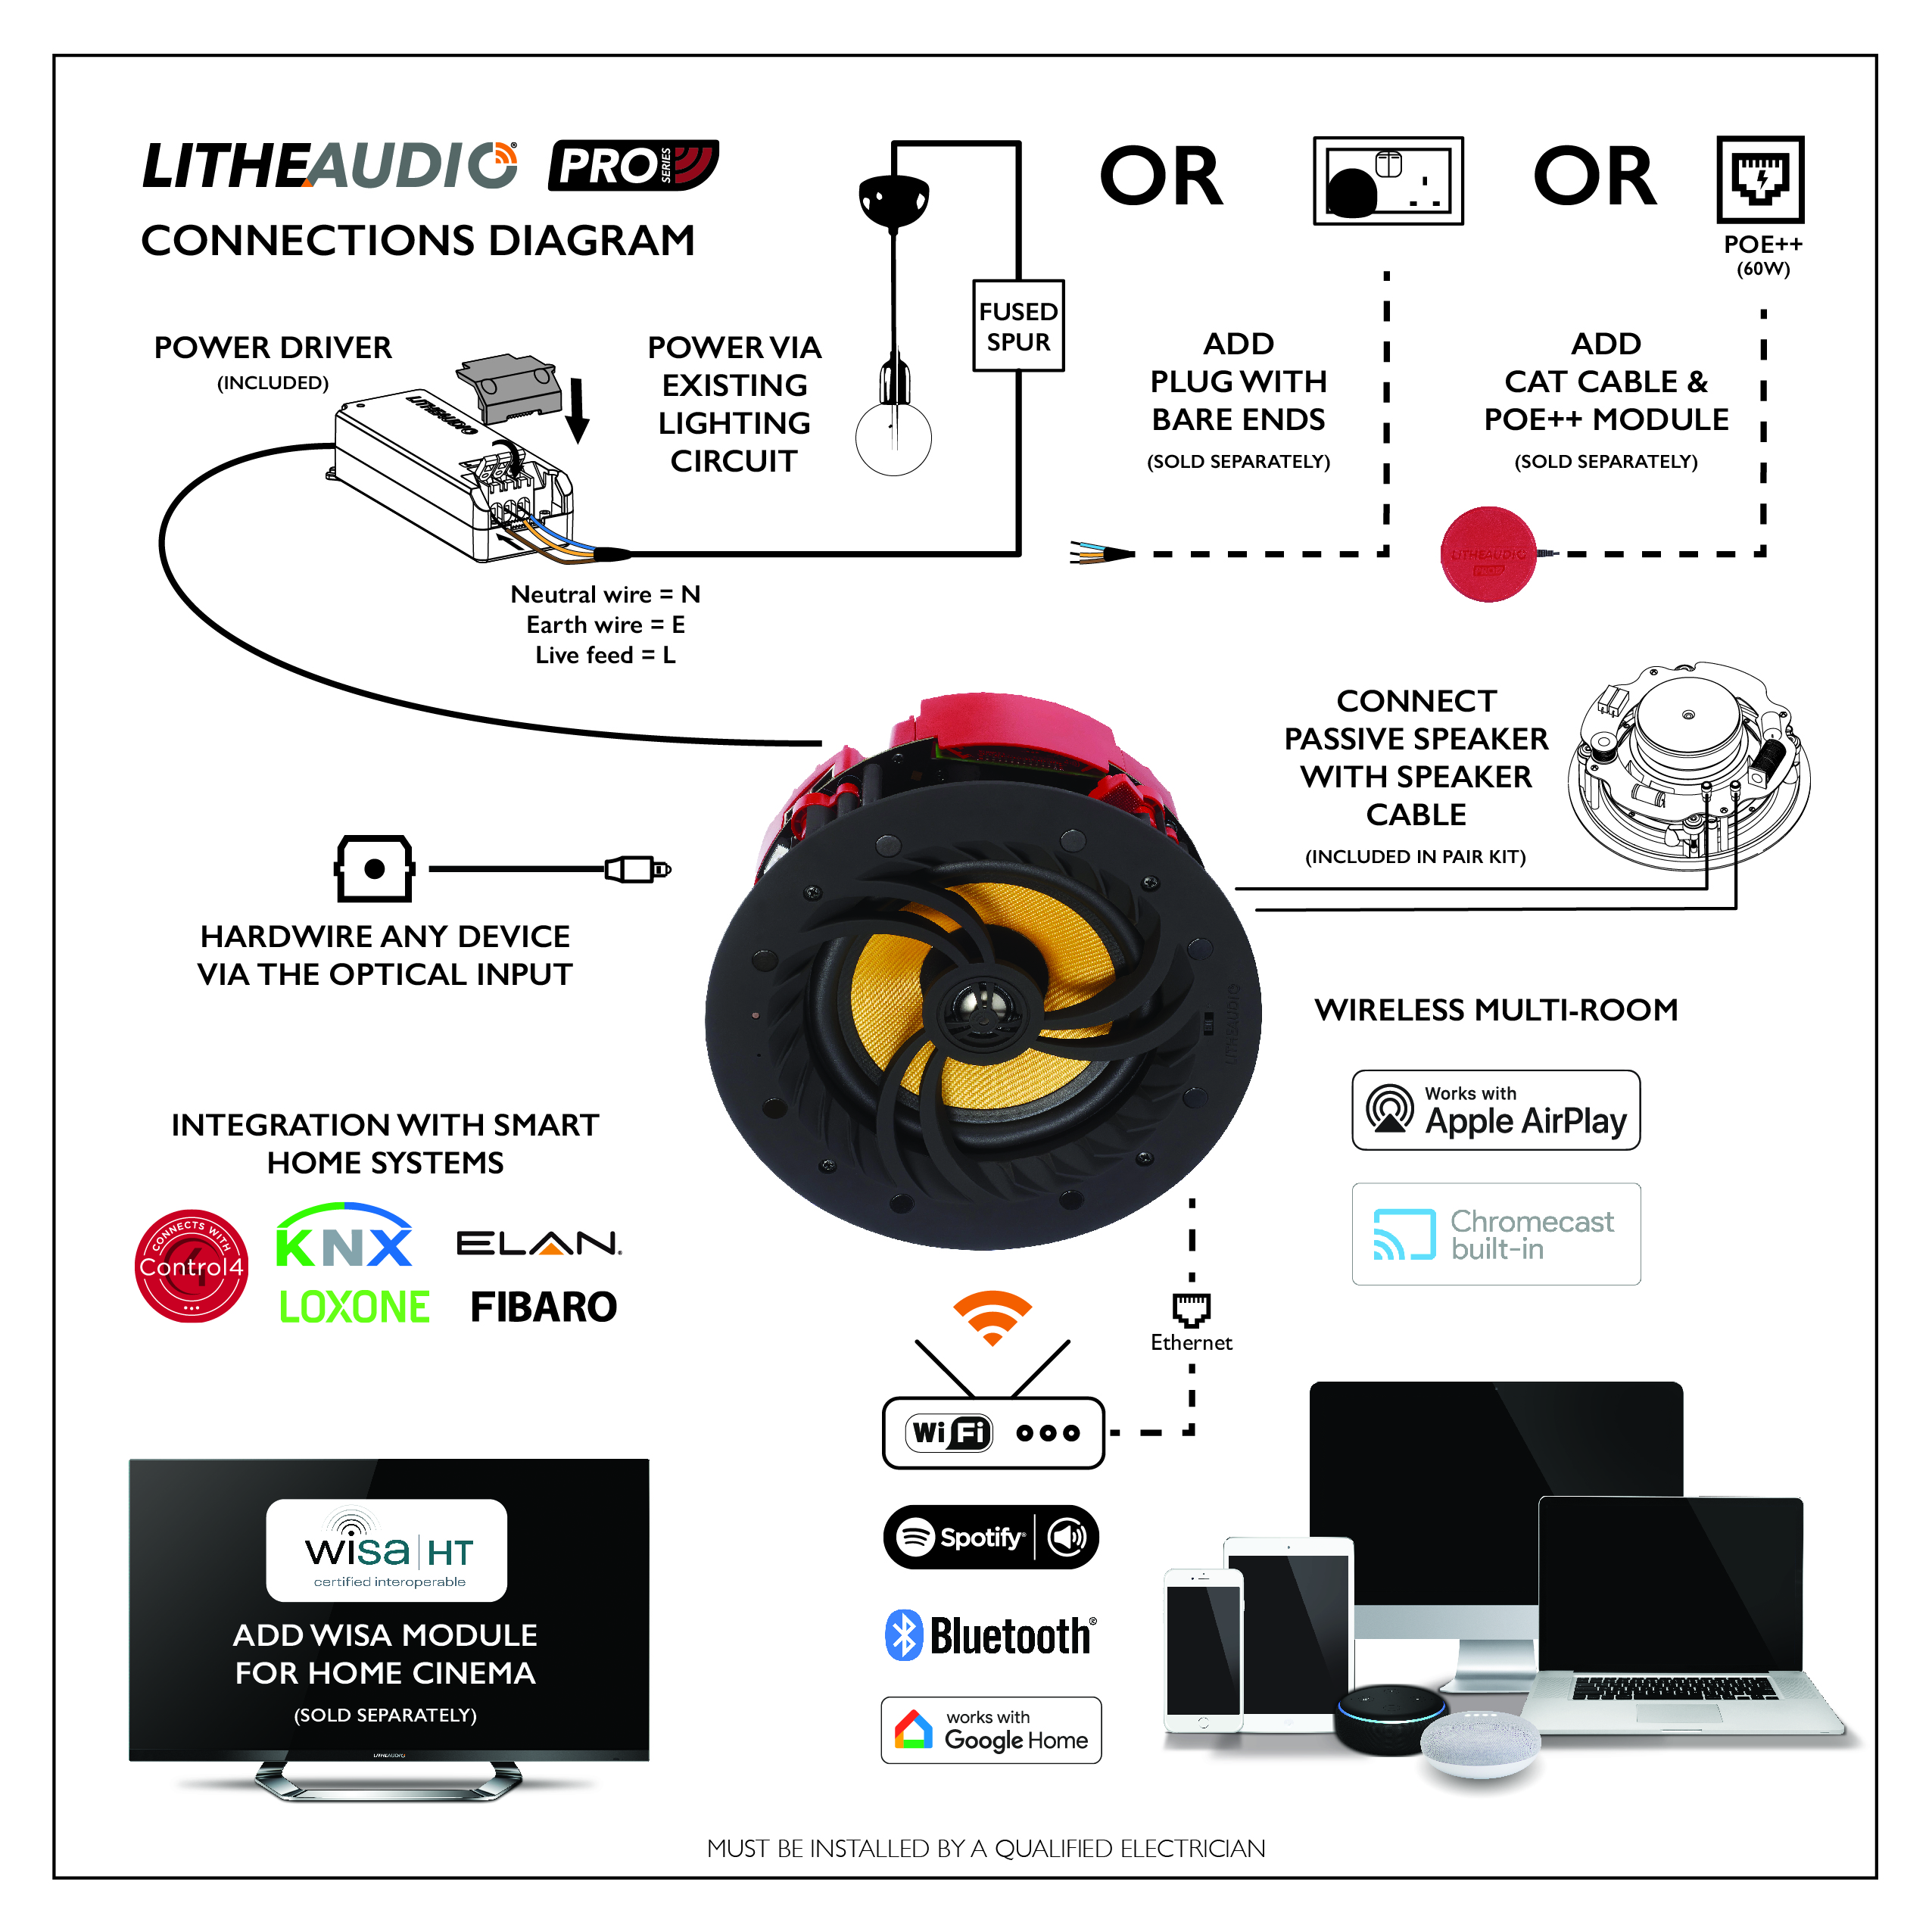 Lithe Audio Pro series Connections diagram